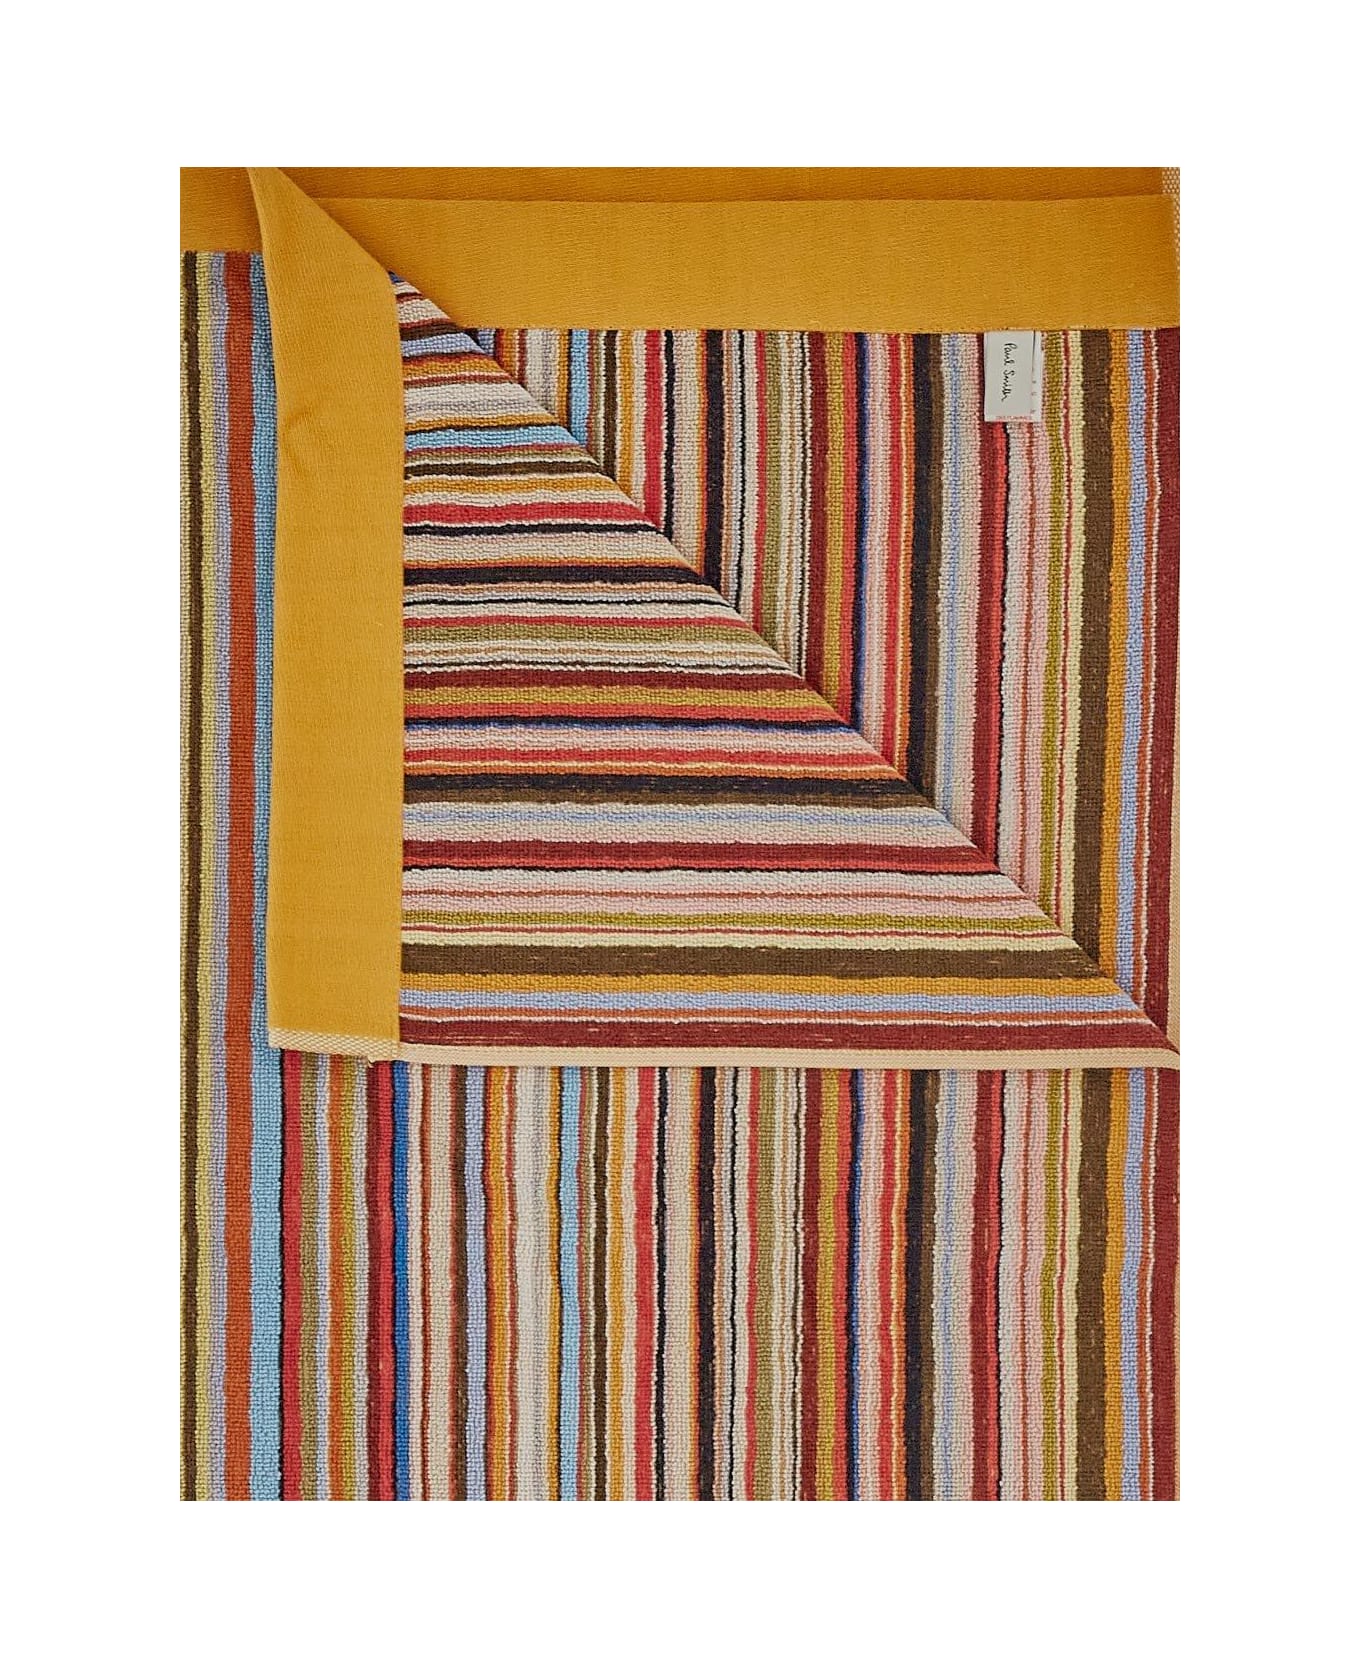 Paul Smith Striped Beach Towel - Multicolor